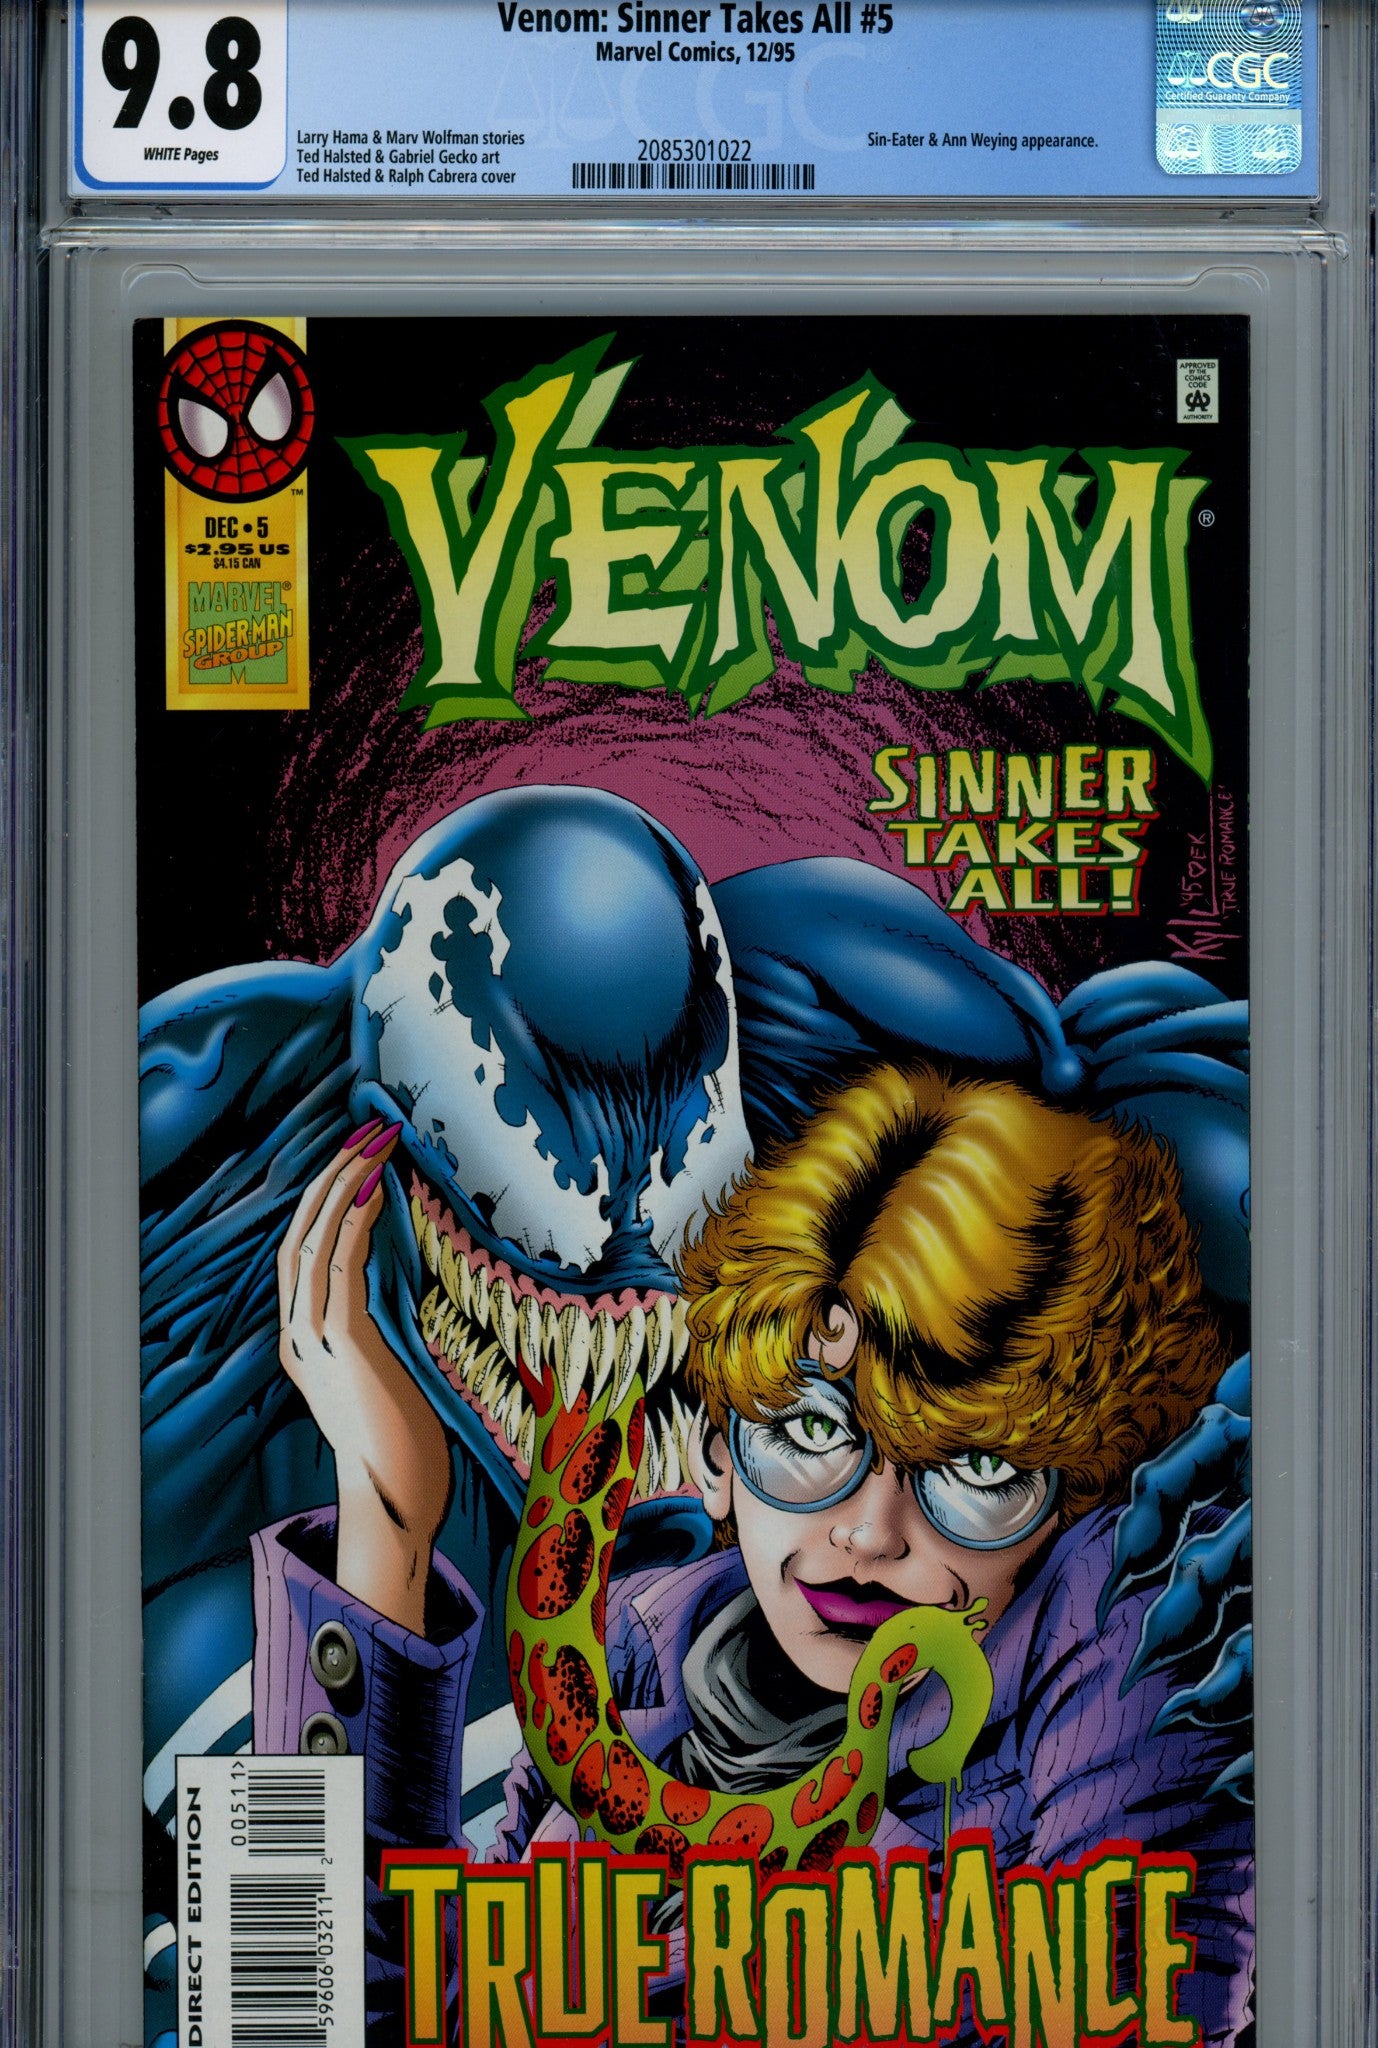 Venom: Sinner Takes All 5 CGC 9.8 (1995)